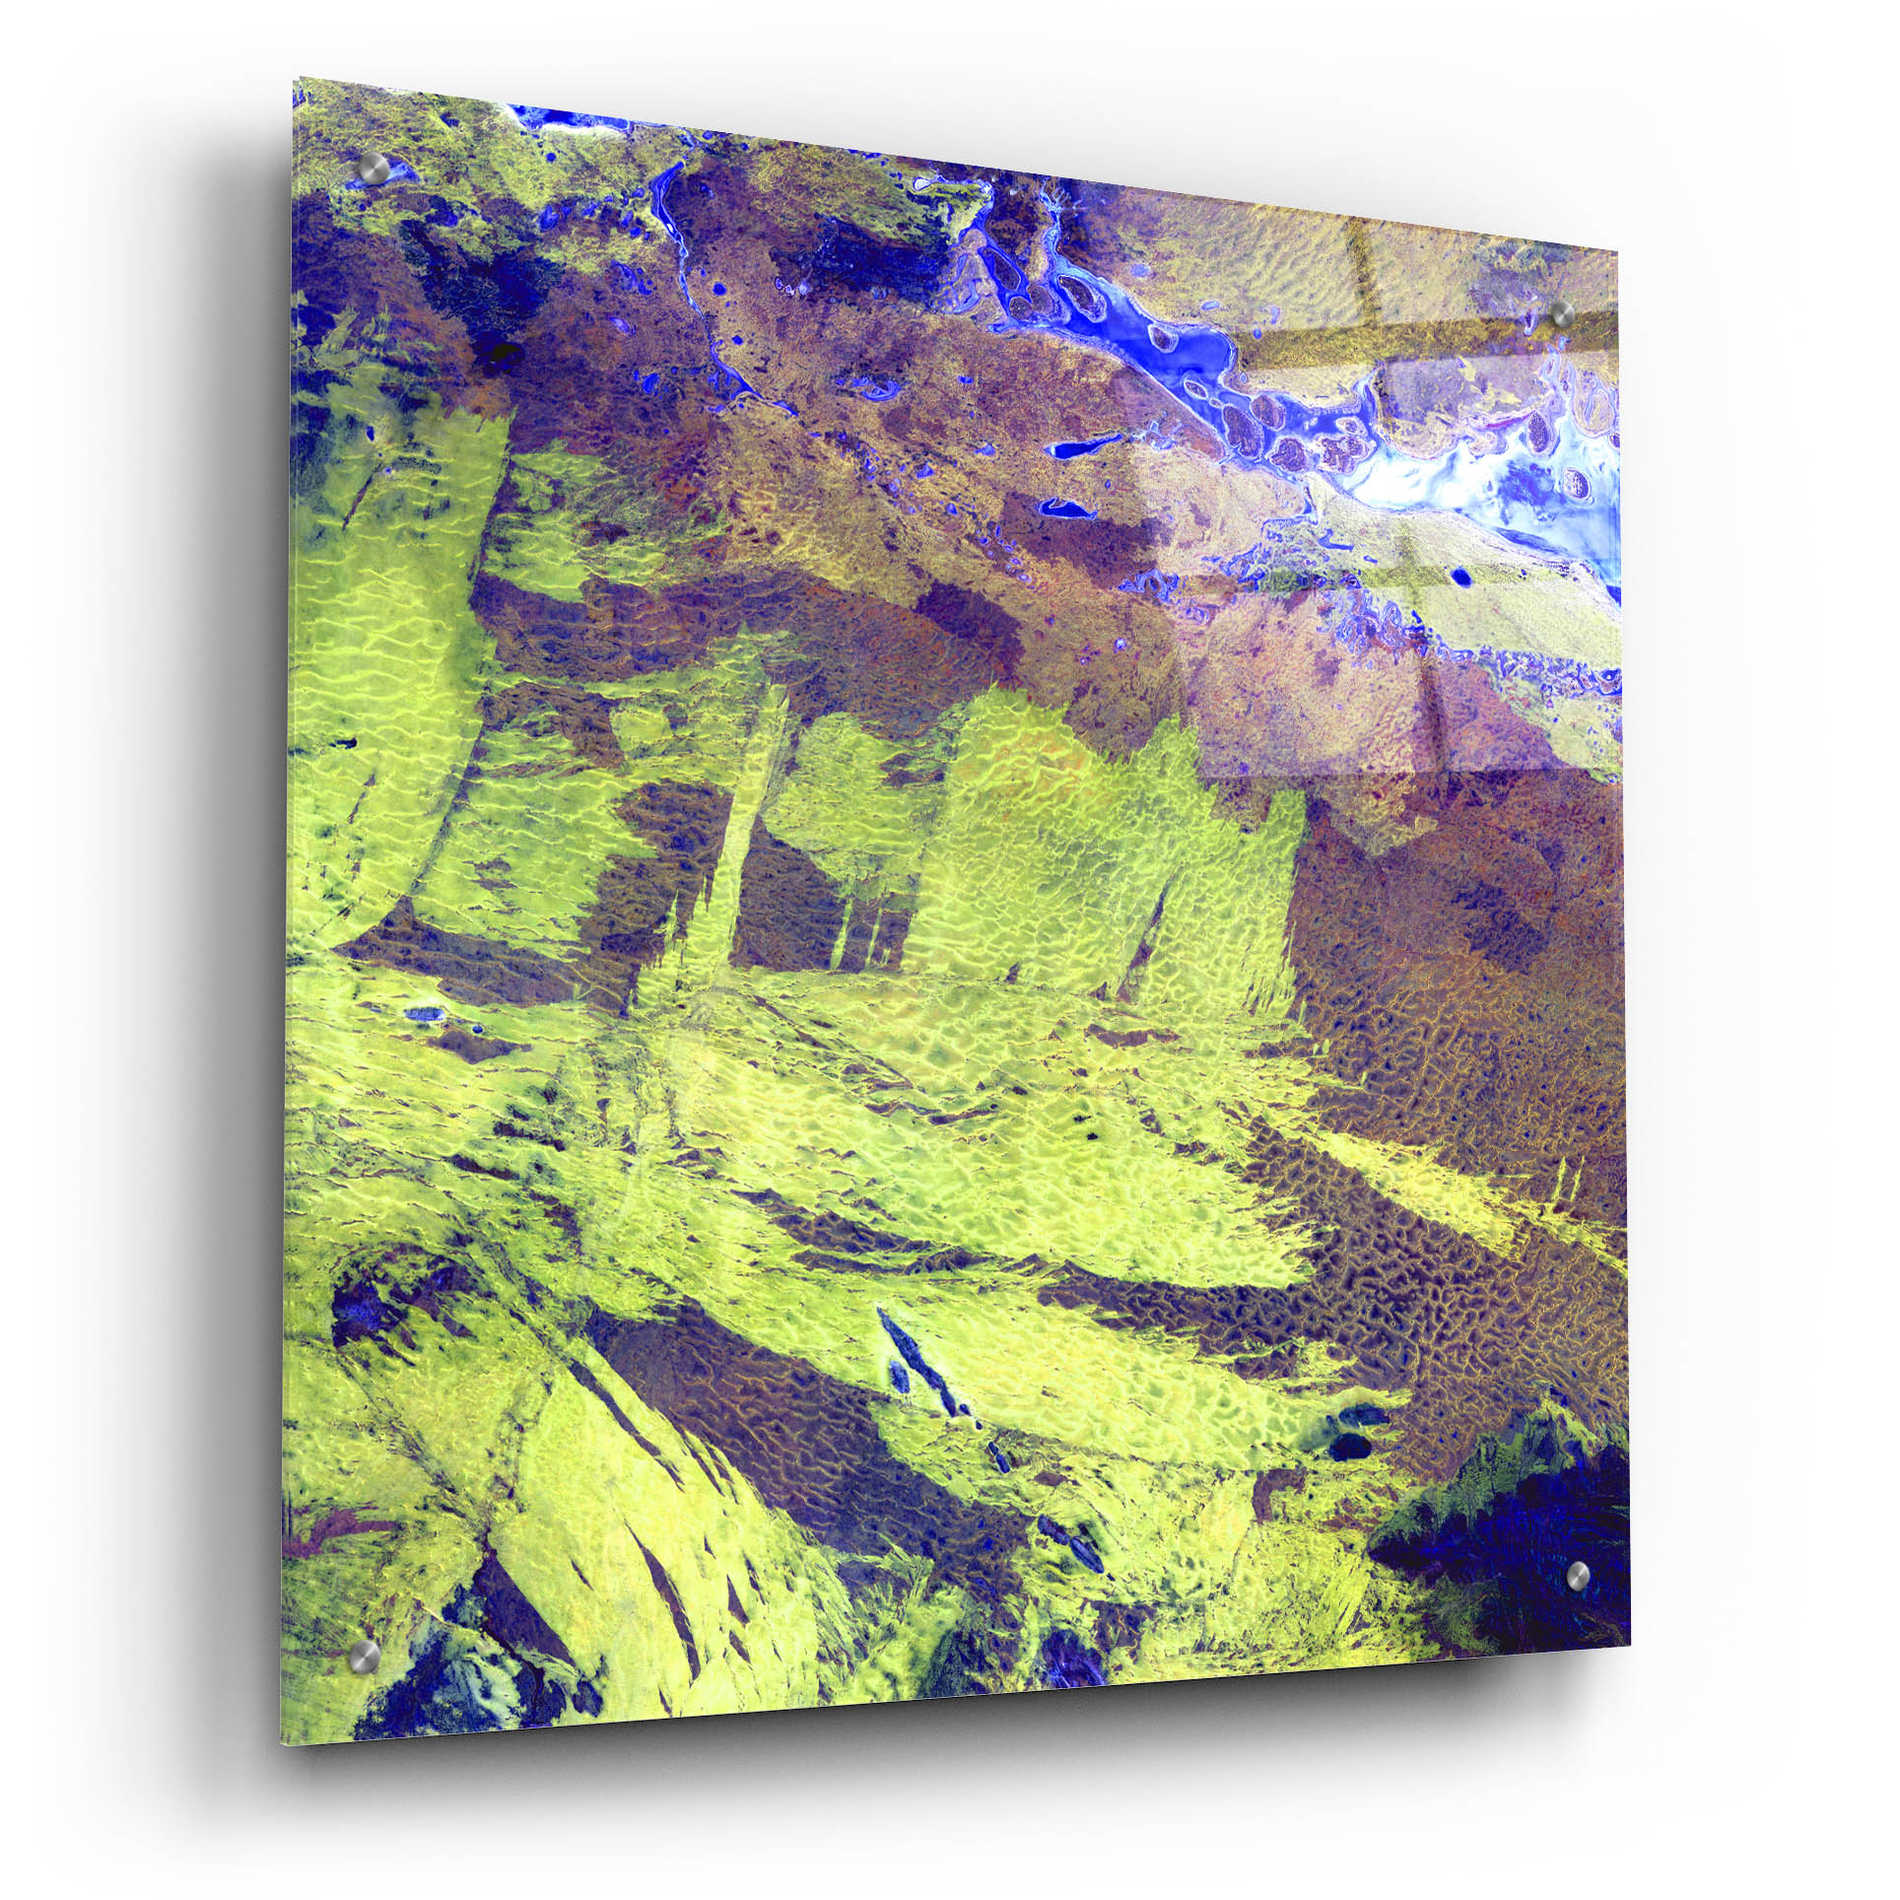 Epic Art 'Earth as Art: Lake Amadeus' Acrylic Glass Wall Art,24x24